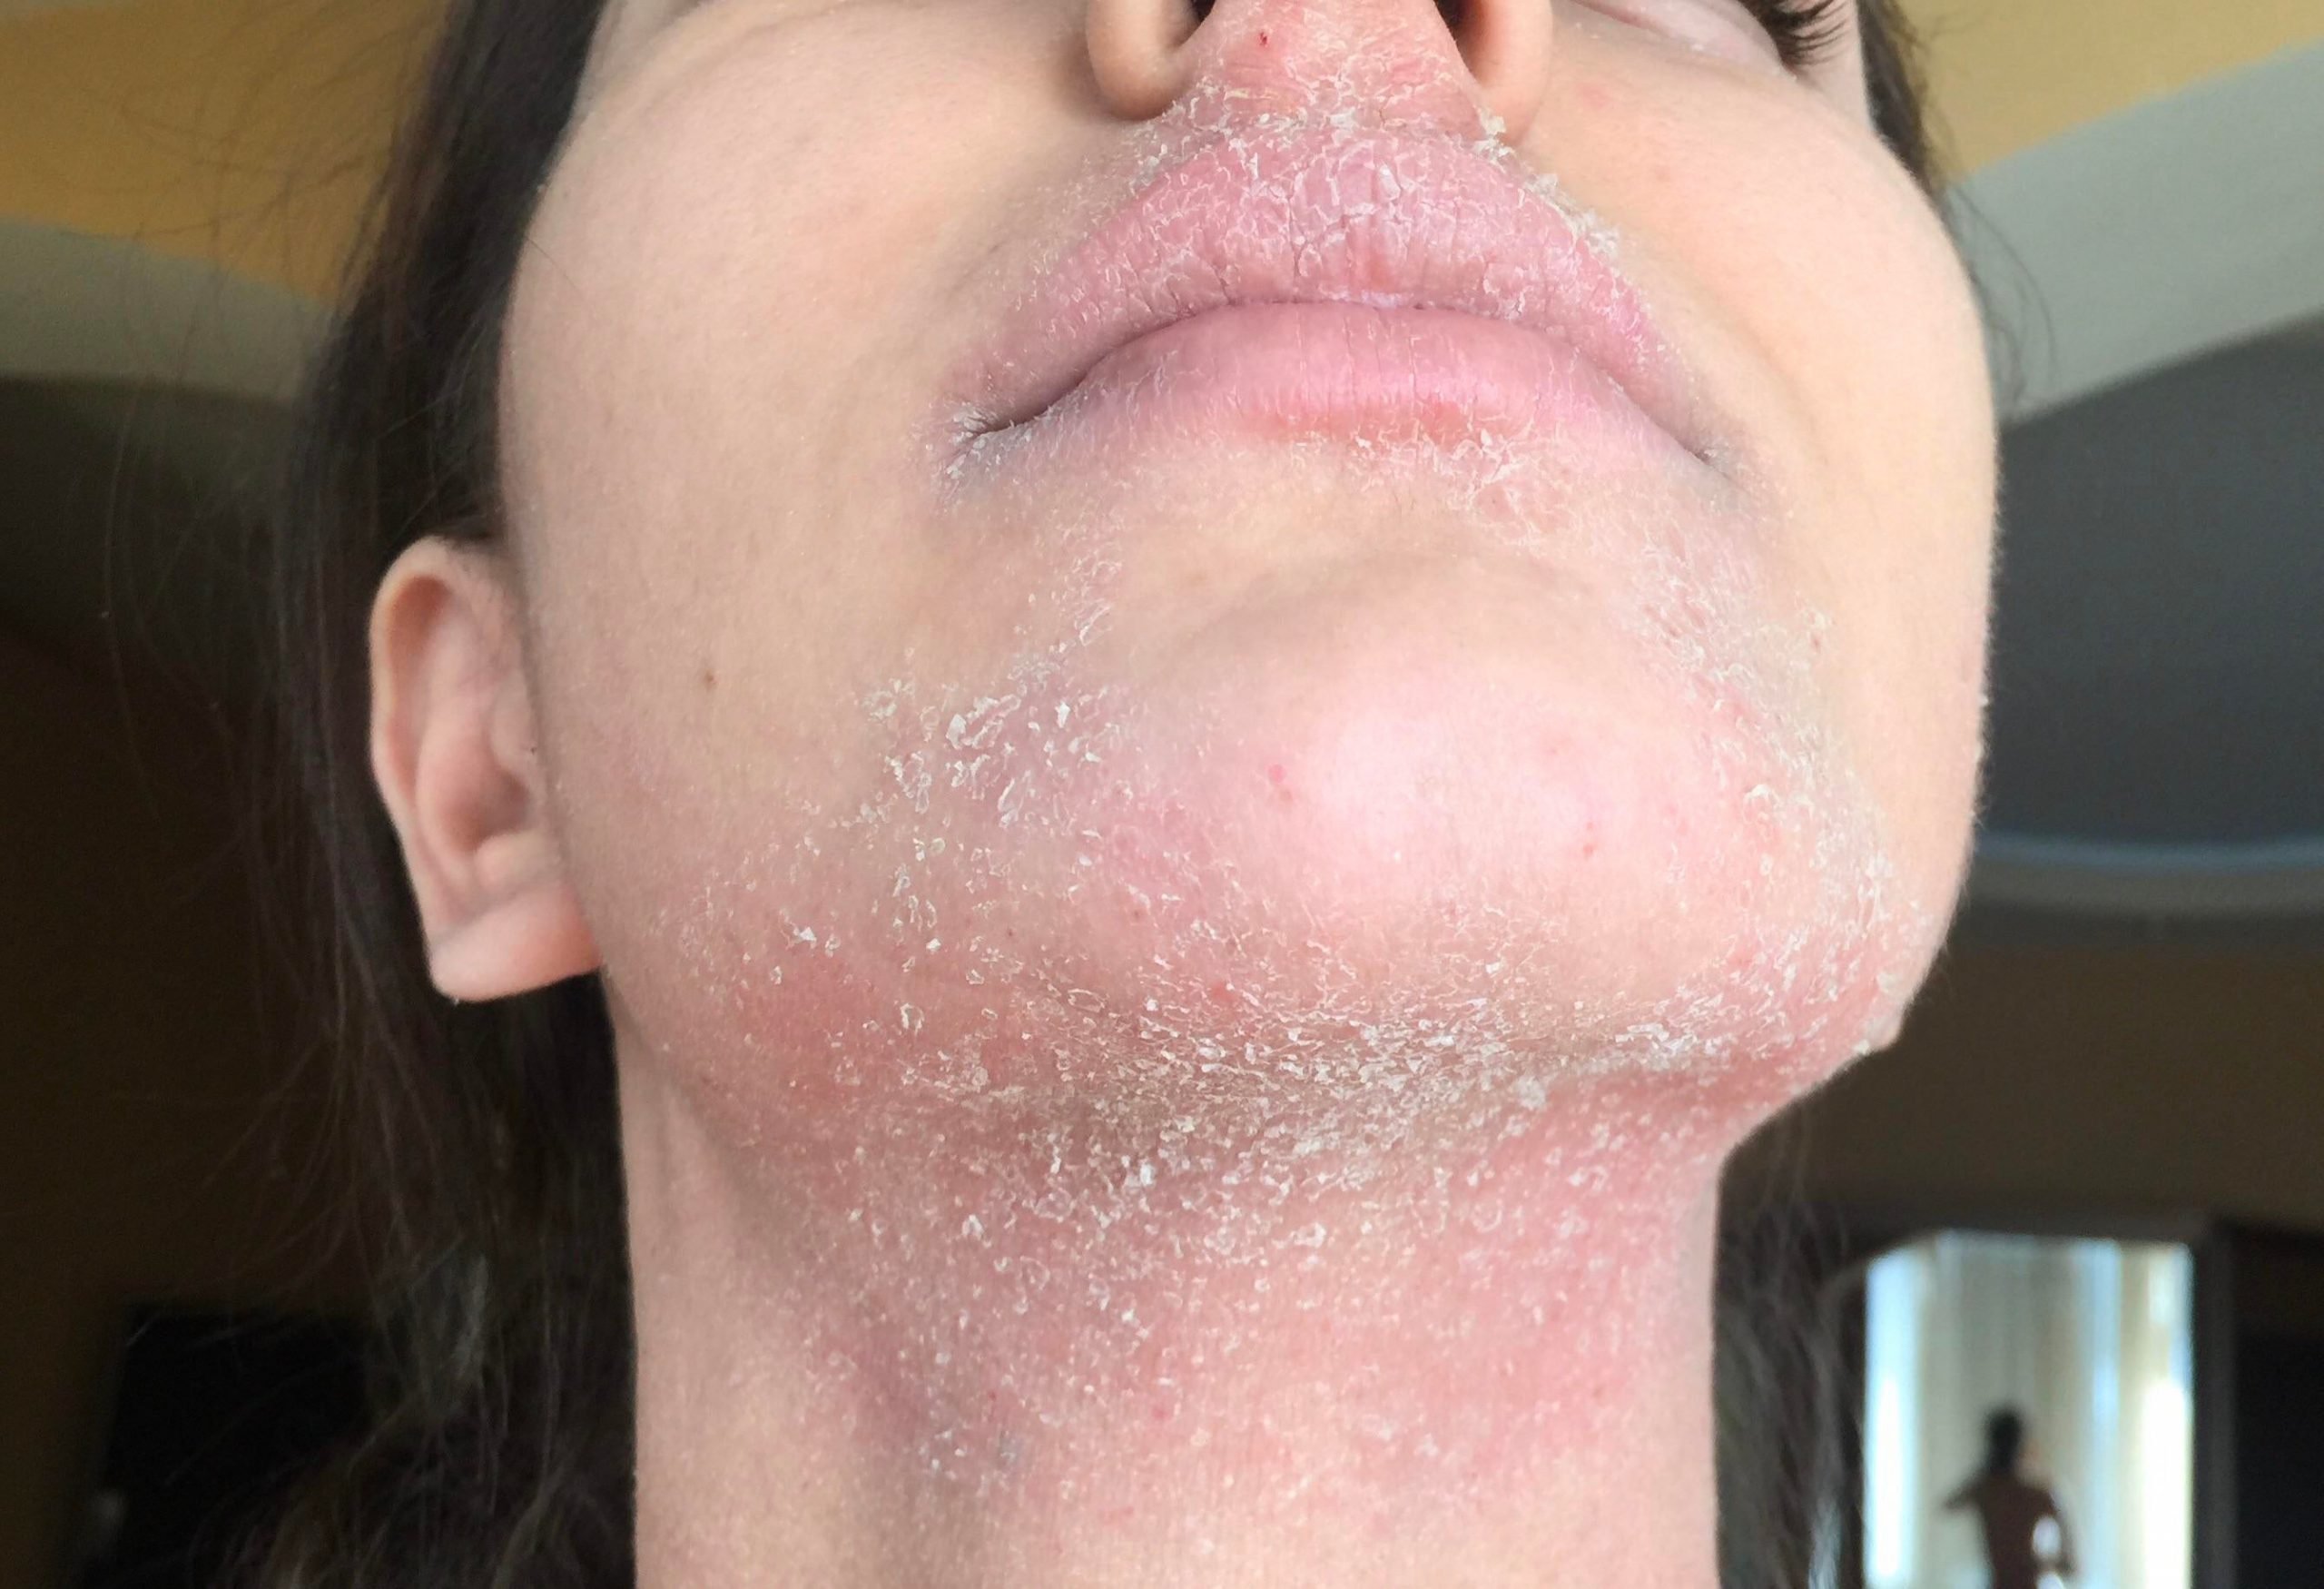 [Skin concerns] They say itâs an eczema awareness day, so ...